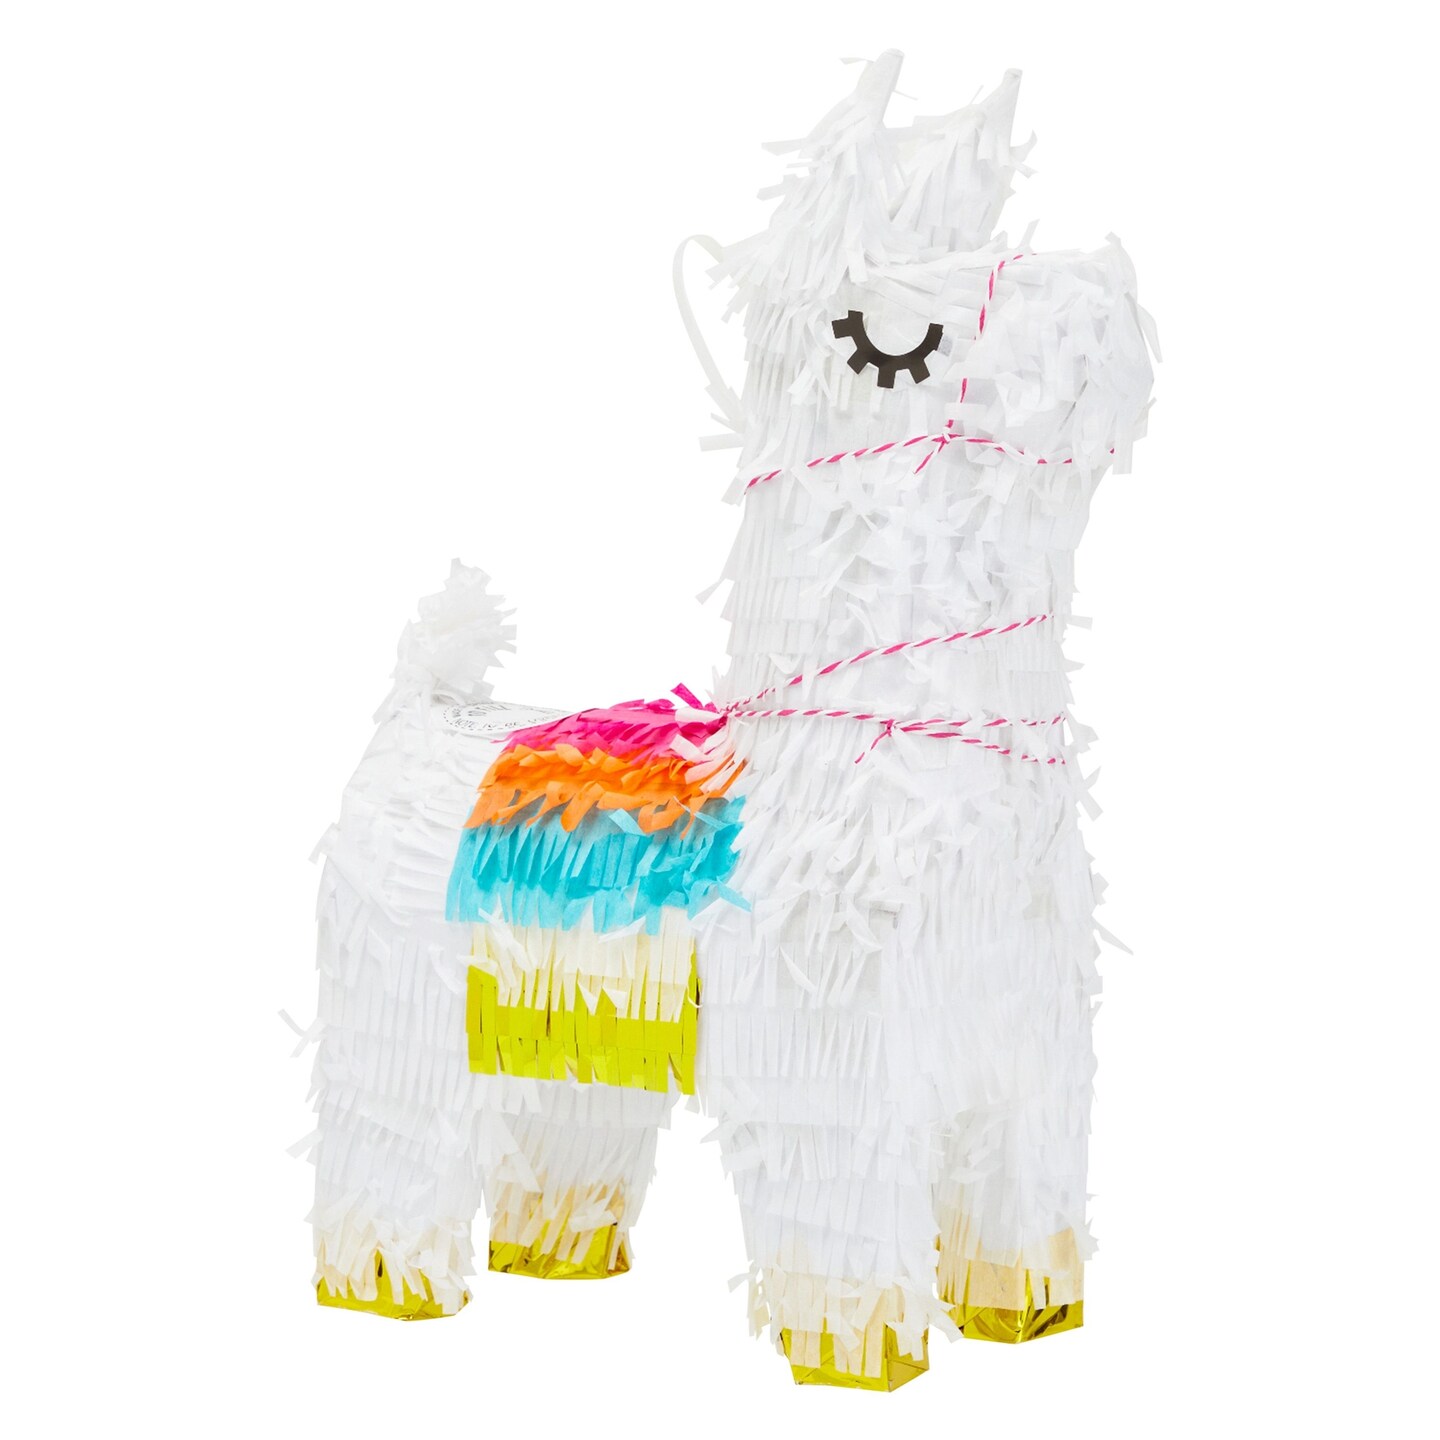 Small Llama Pinata for Fiesta Birthday Party Supplies, Cinco de Mayo Decorations (White, 8.5 x 15 x 4.5 In)